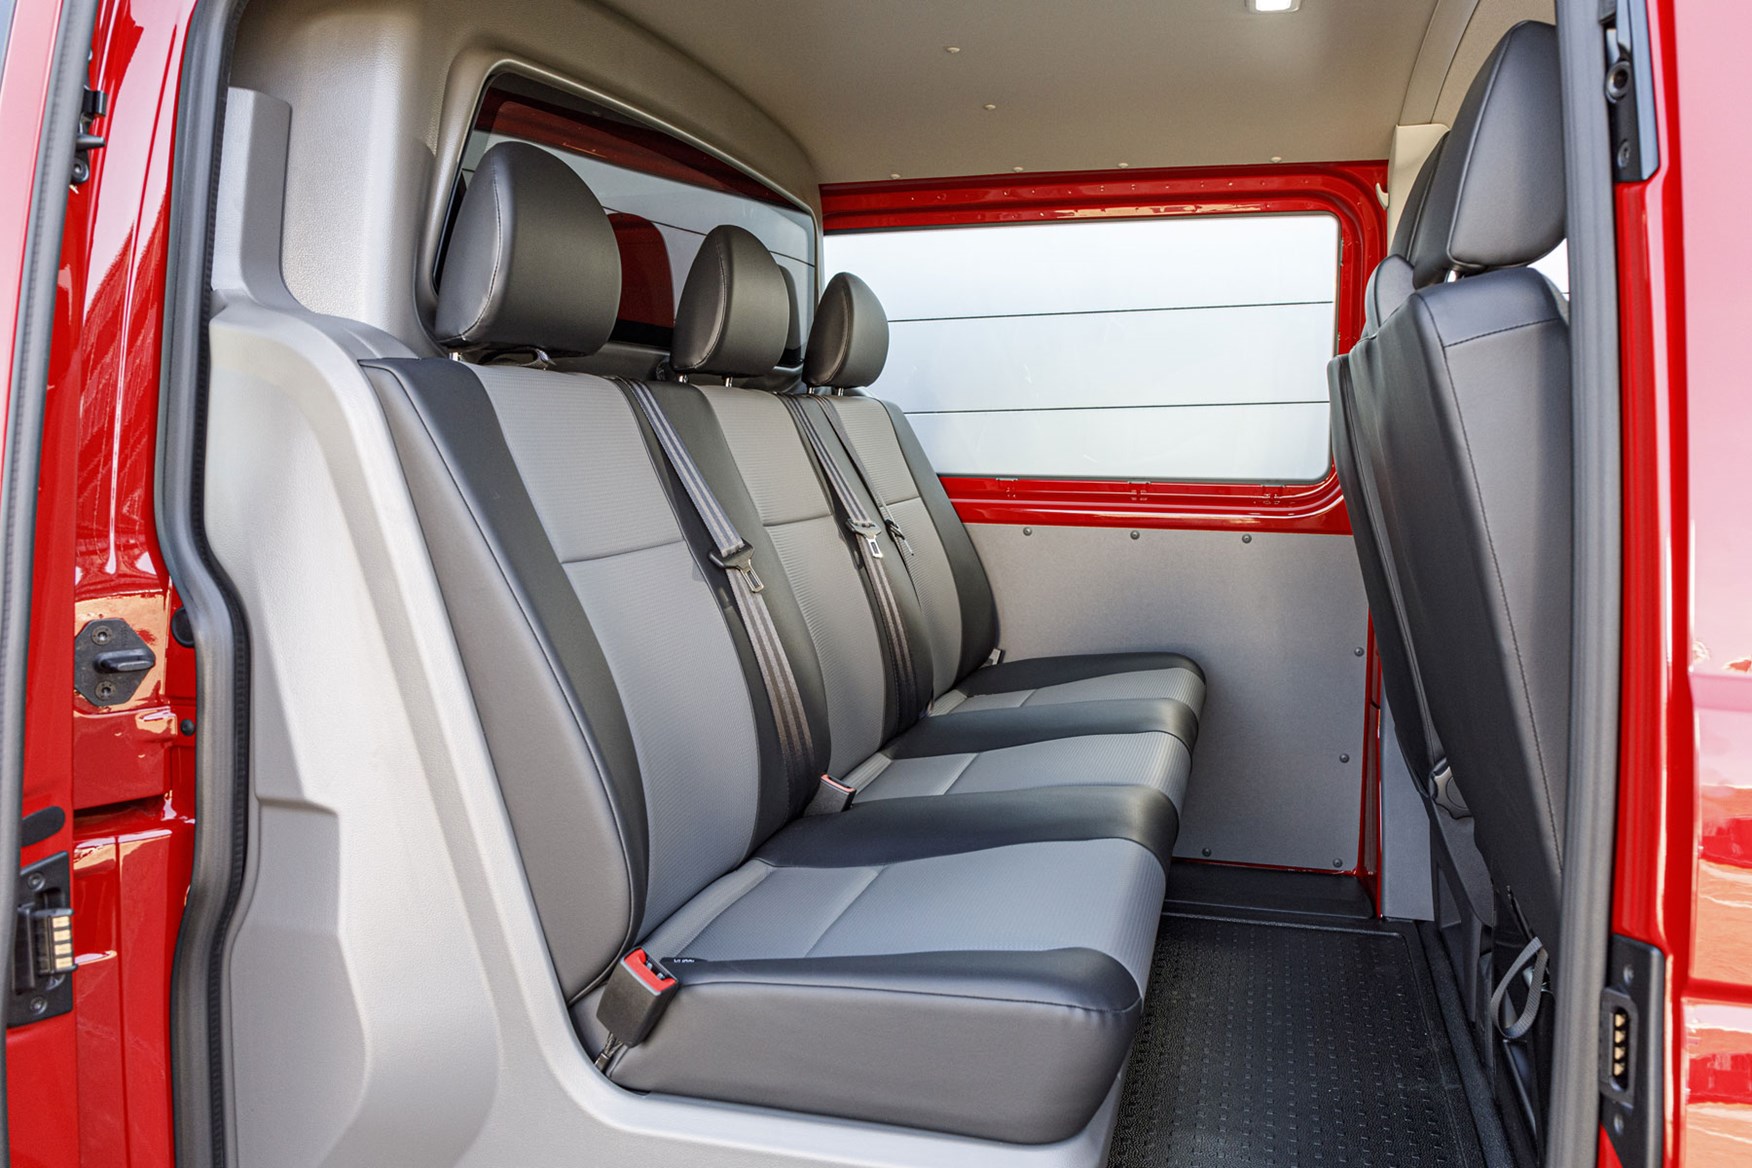 VW Transporter review - T6.1 2019 facelift, kombi rear seats